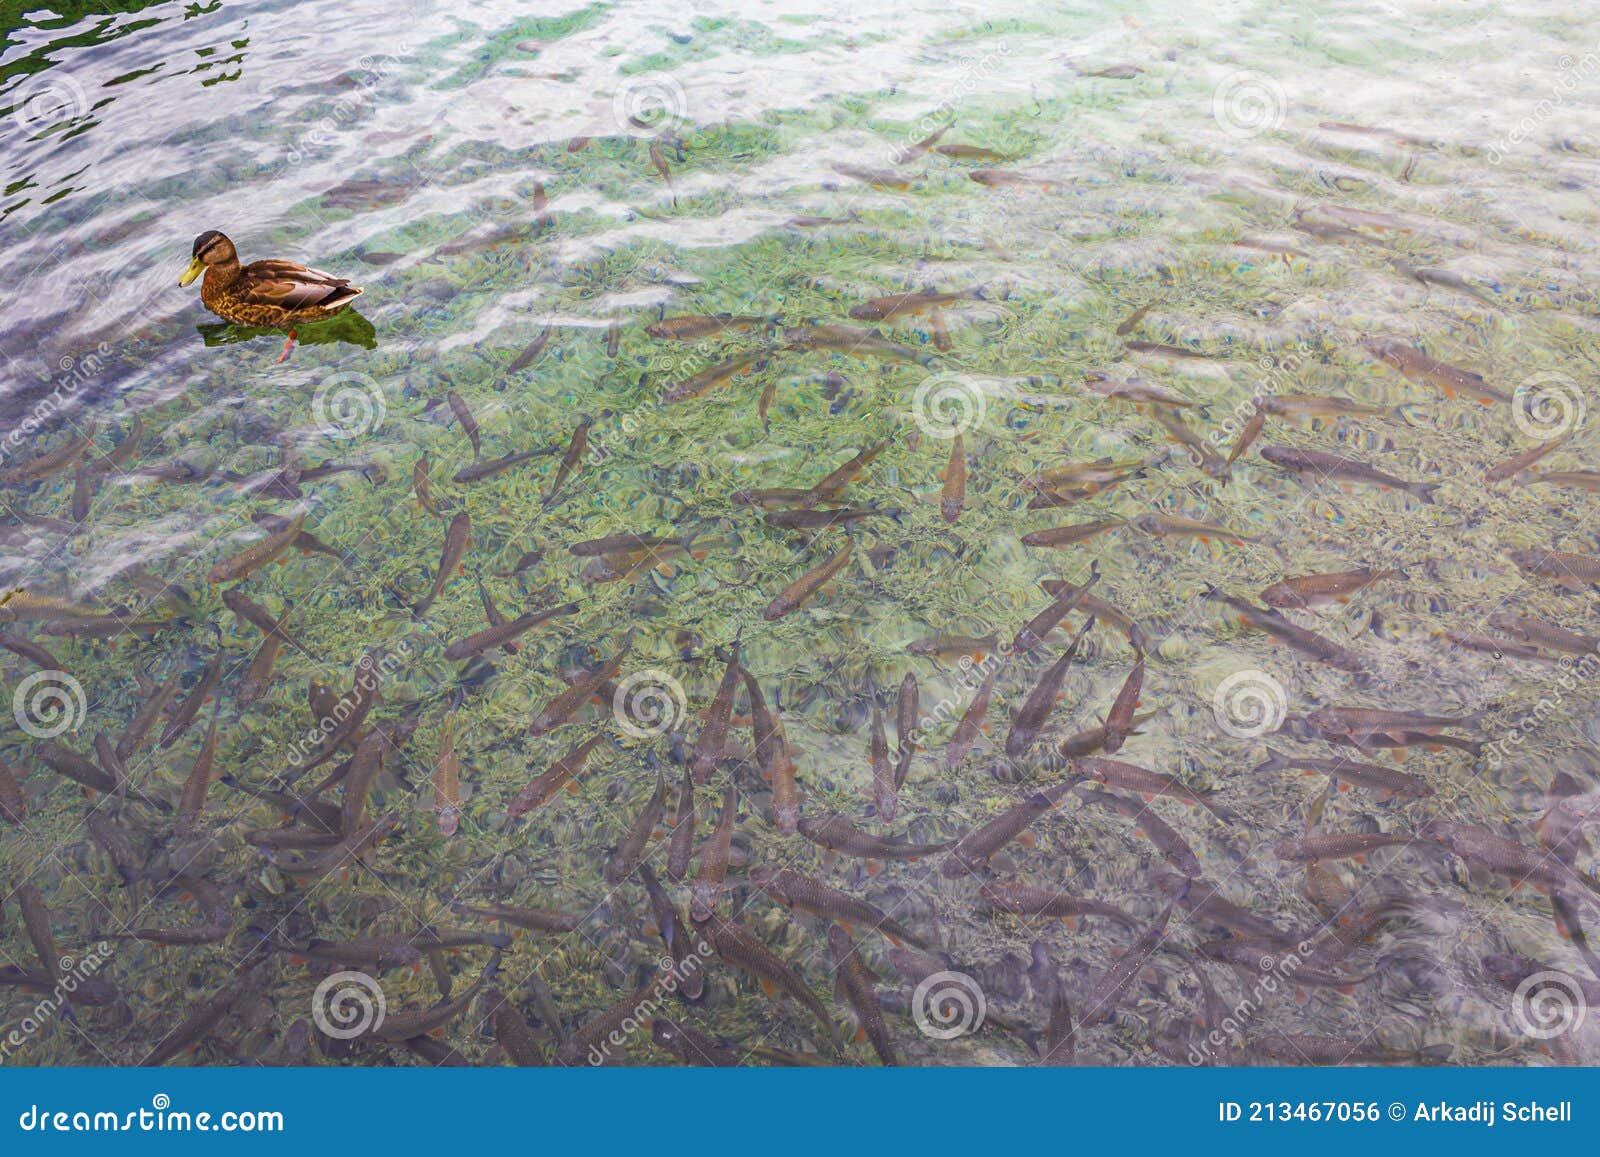 Animals Ducks Fish Turquoise Water Plitvice Lakes National Park Croatia  Stock Photo - Image of panorama, paradise: 213467056